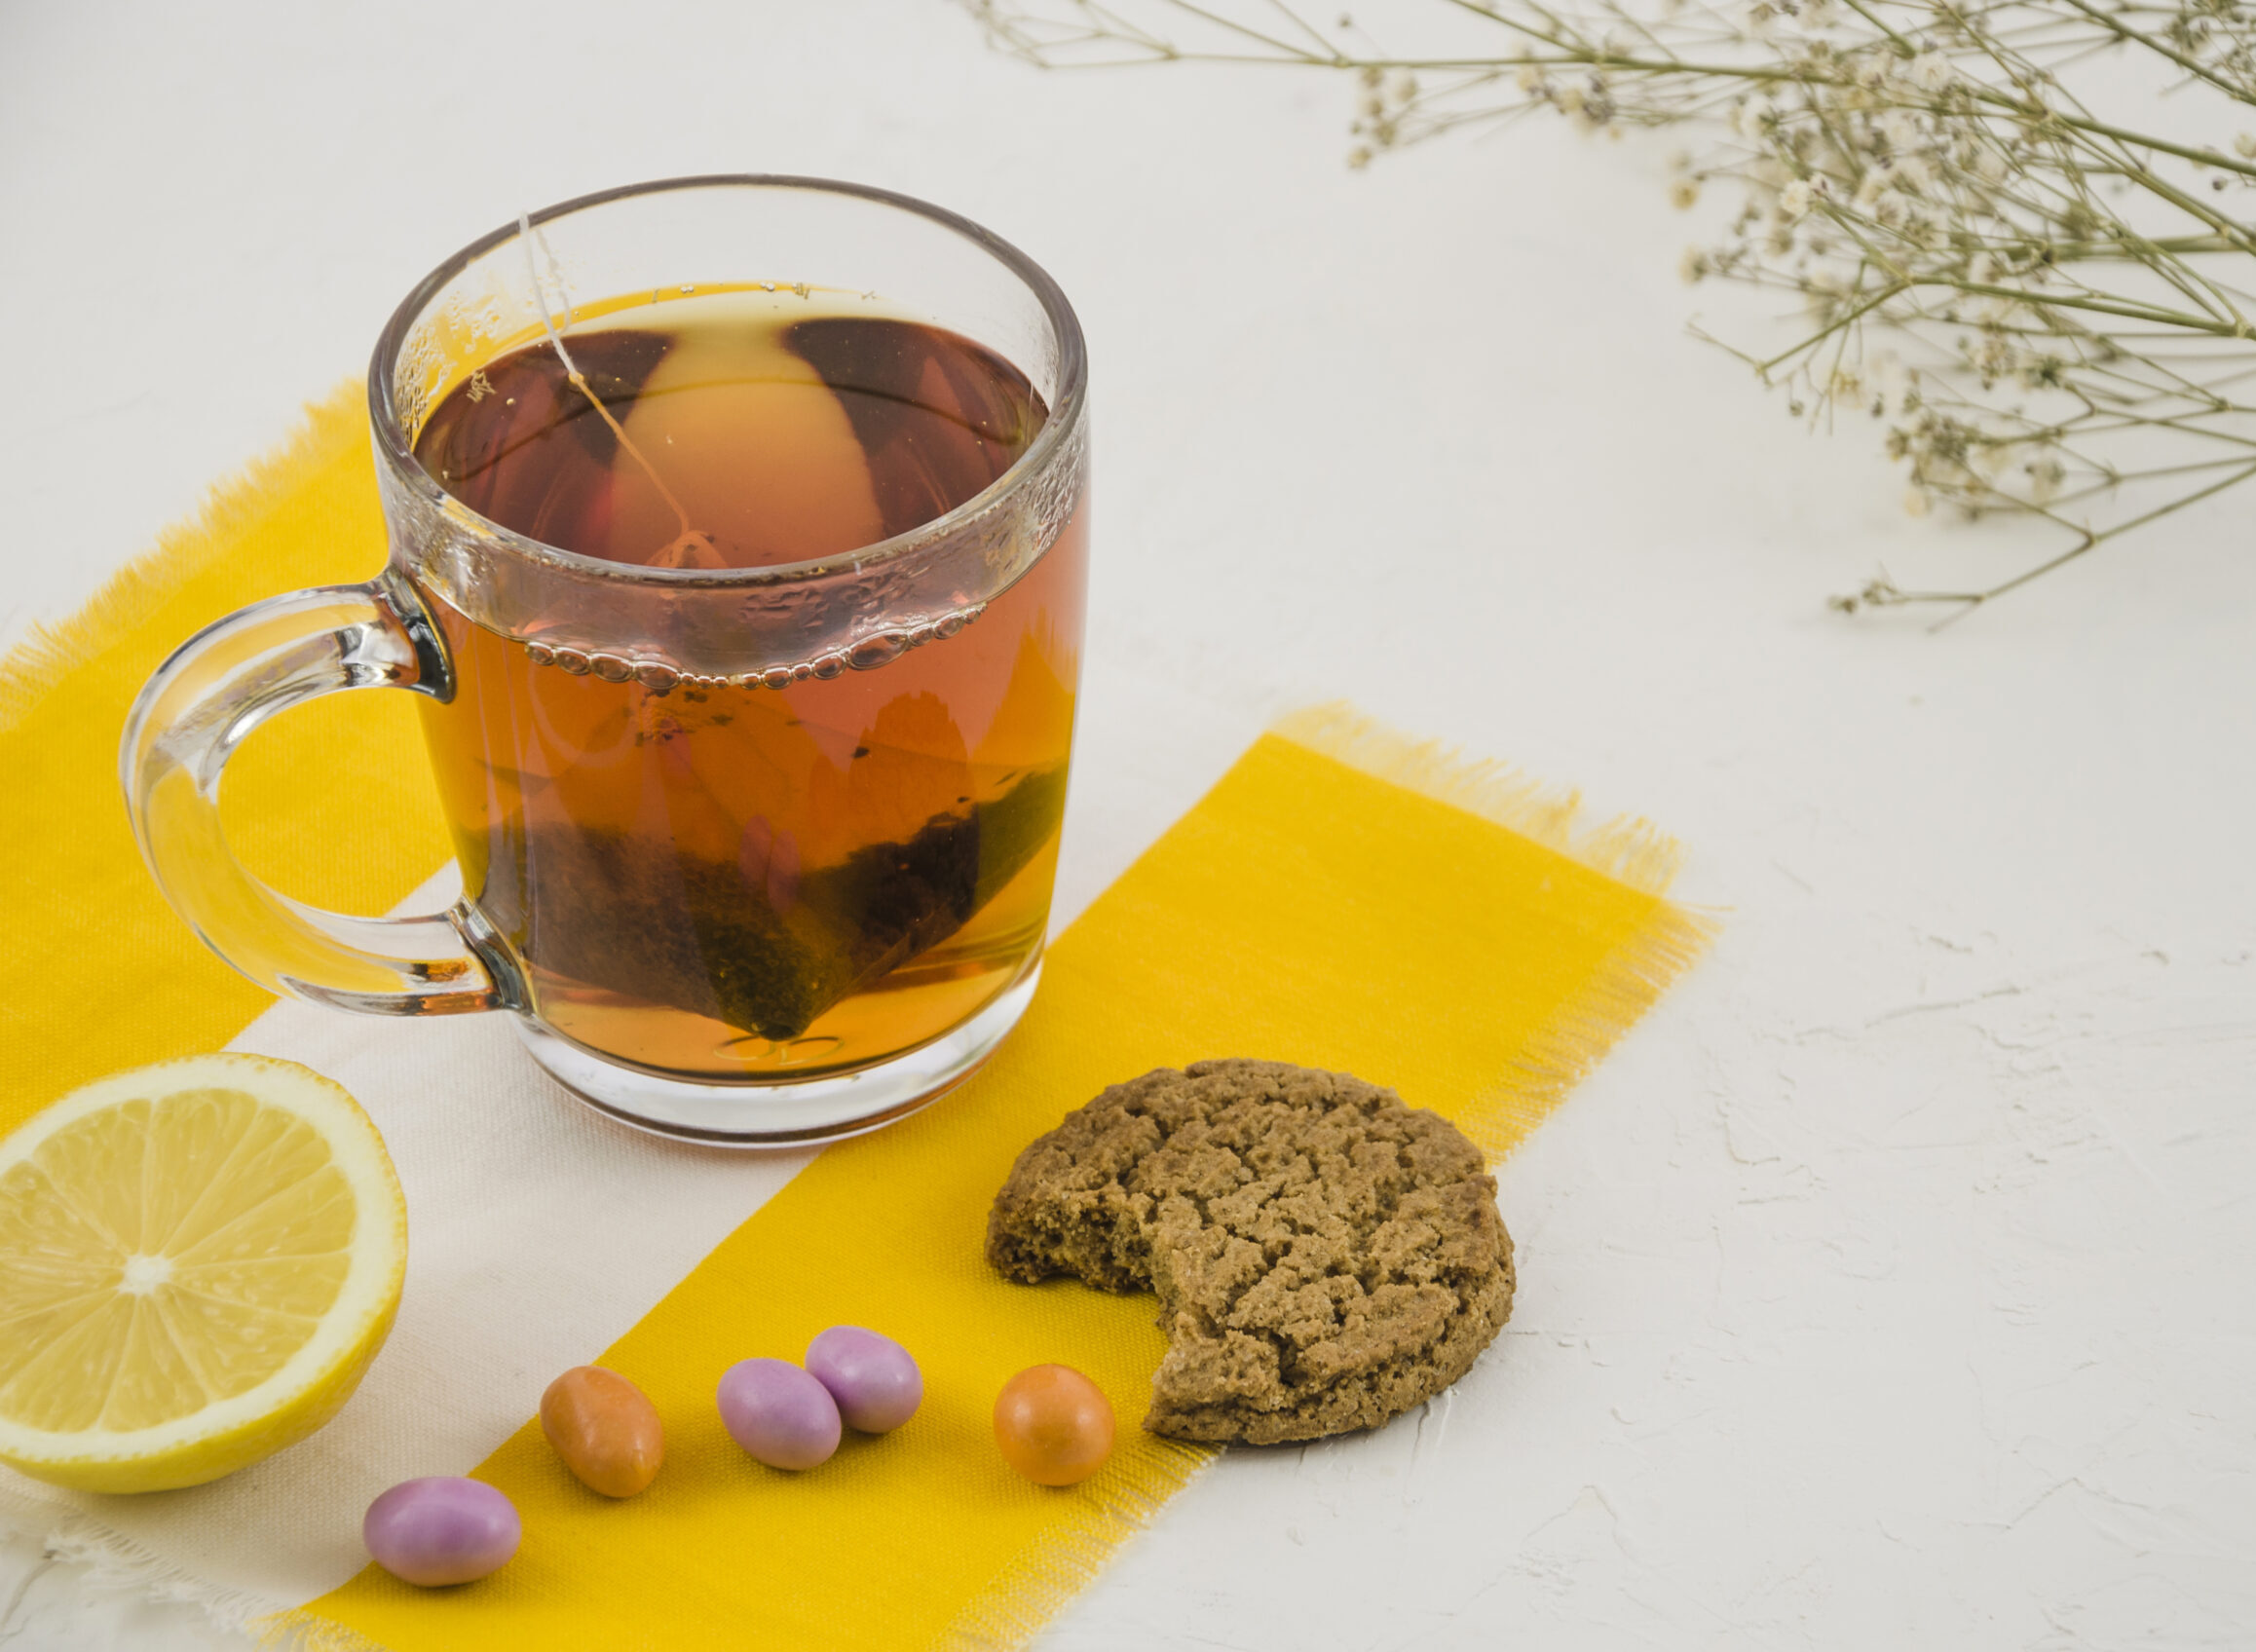 Best Tea for Constipation: 1. Senna Tea, 2. Peppermint Tea, 3. Ginger Tea, 4. Dandelion Tea, 5. Chamomile Tea, 6. Licorice Root Tea, 7. Black Tea, 8. Green Tea